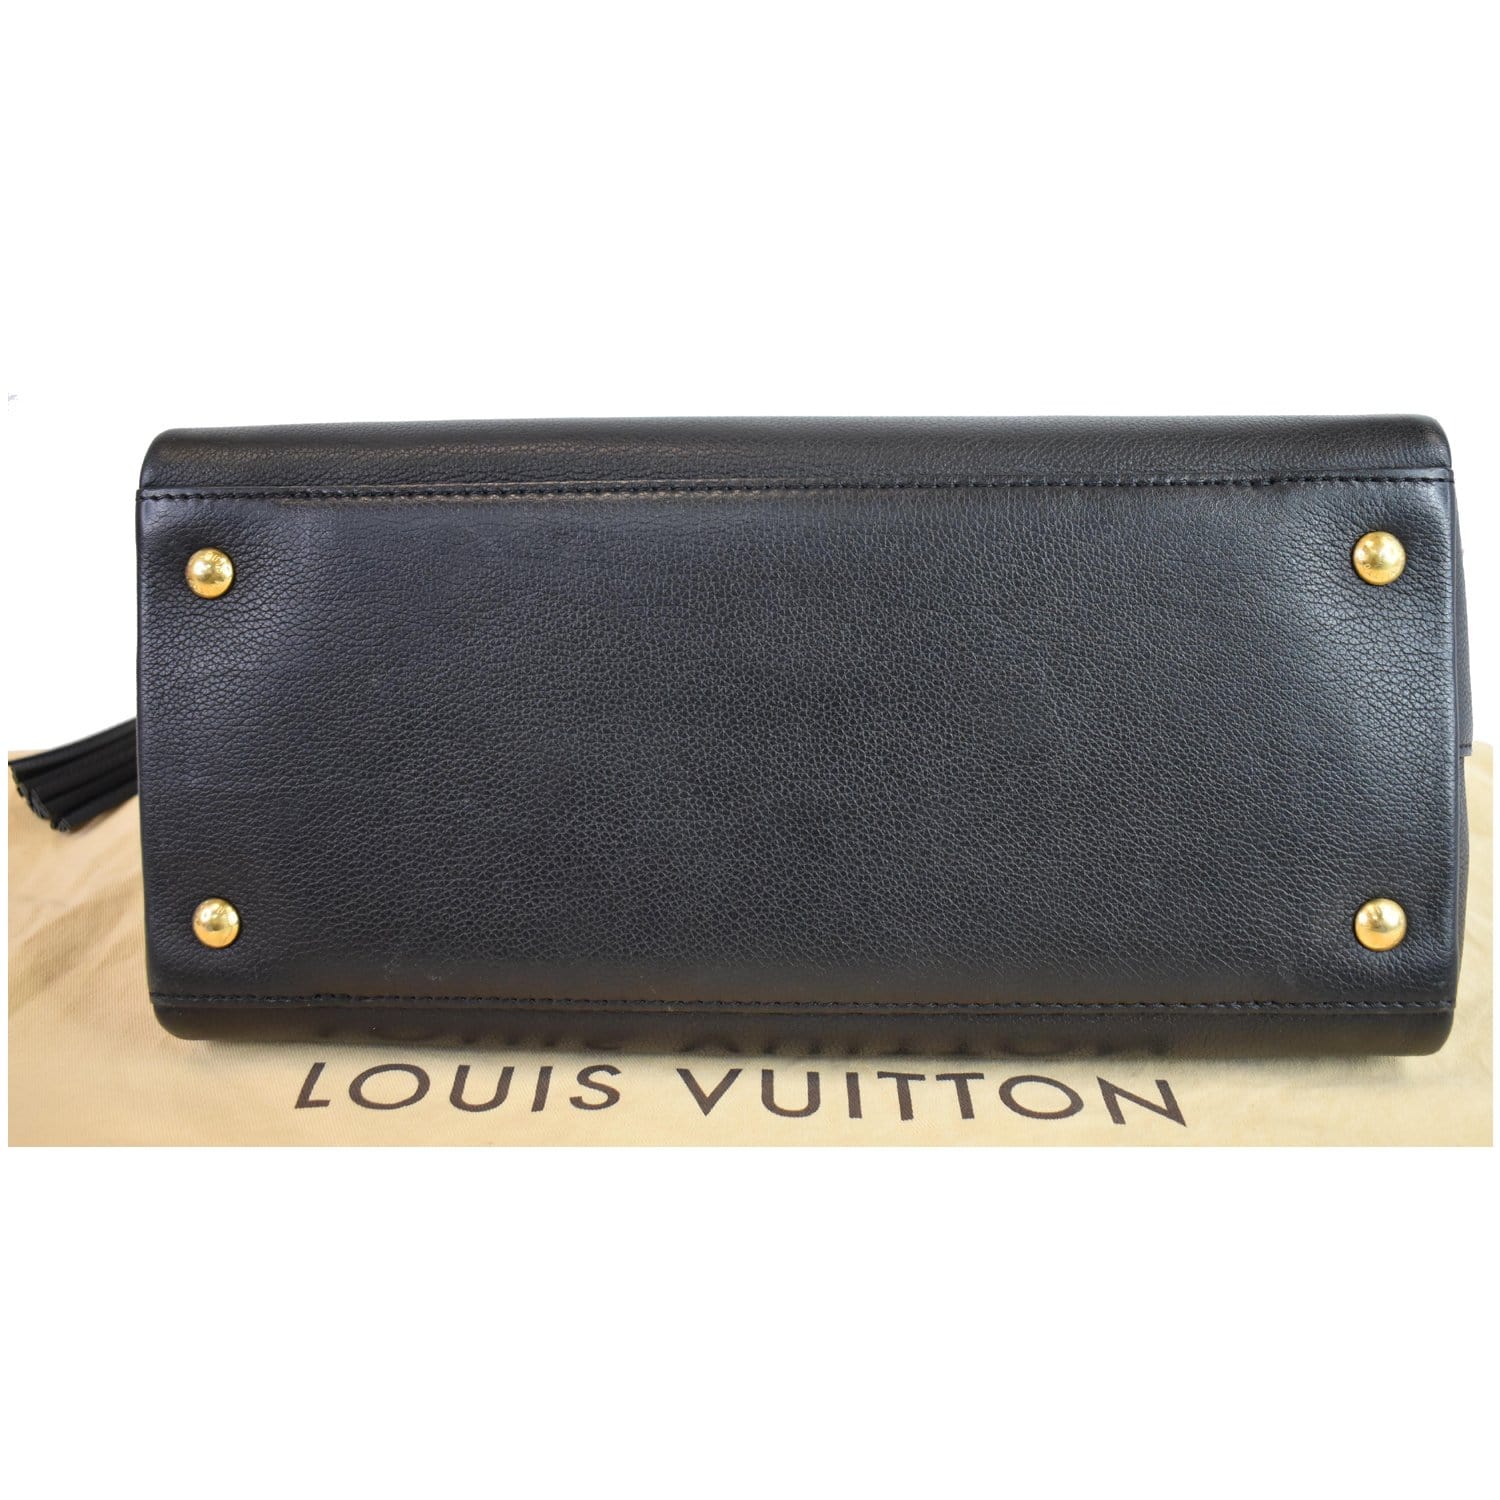 Louis Vuitton Lockmeto Calfskin Leather Tote Bag Black